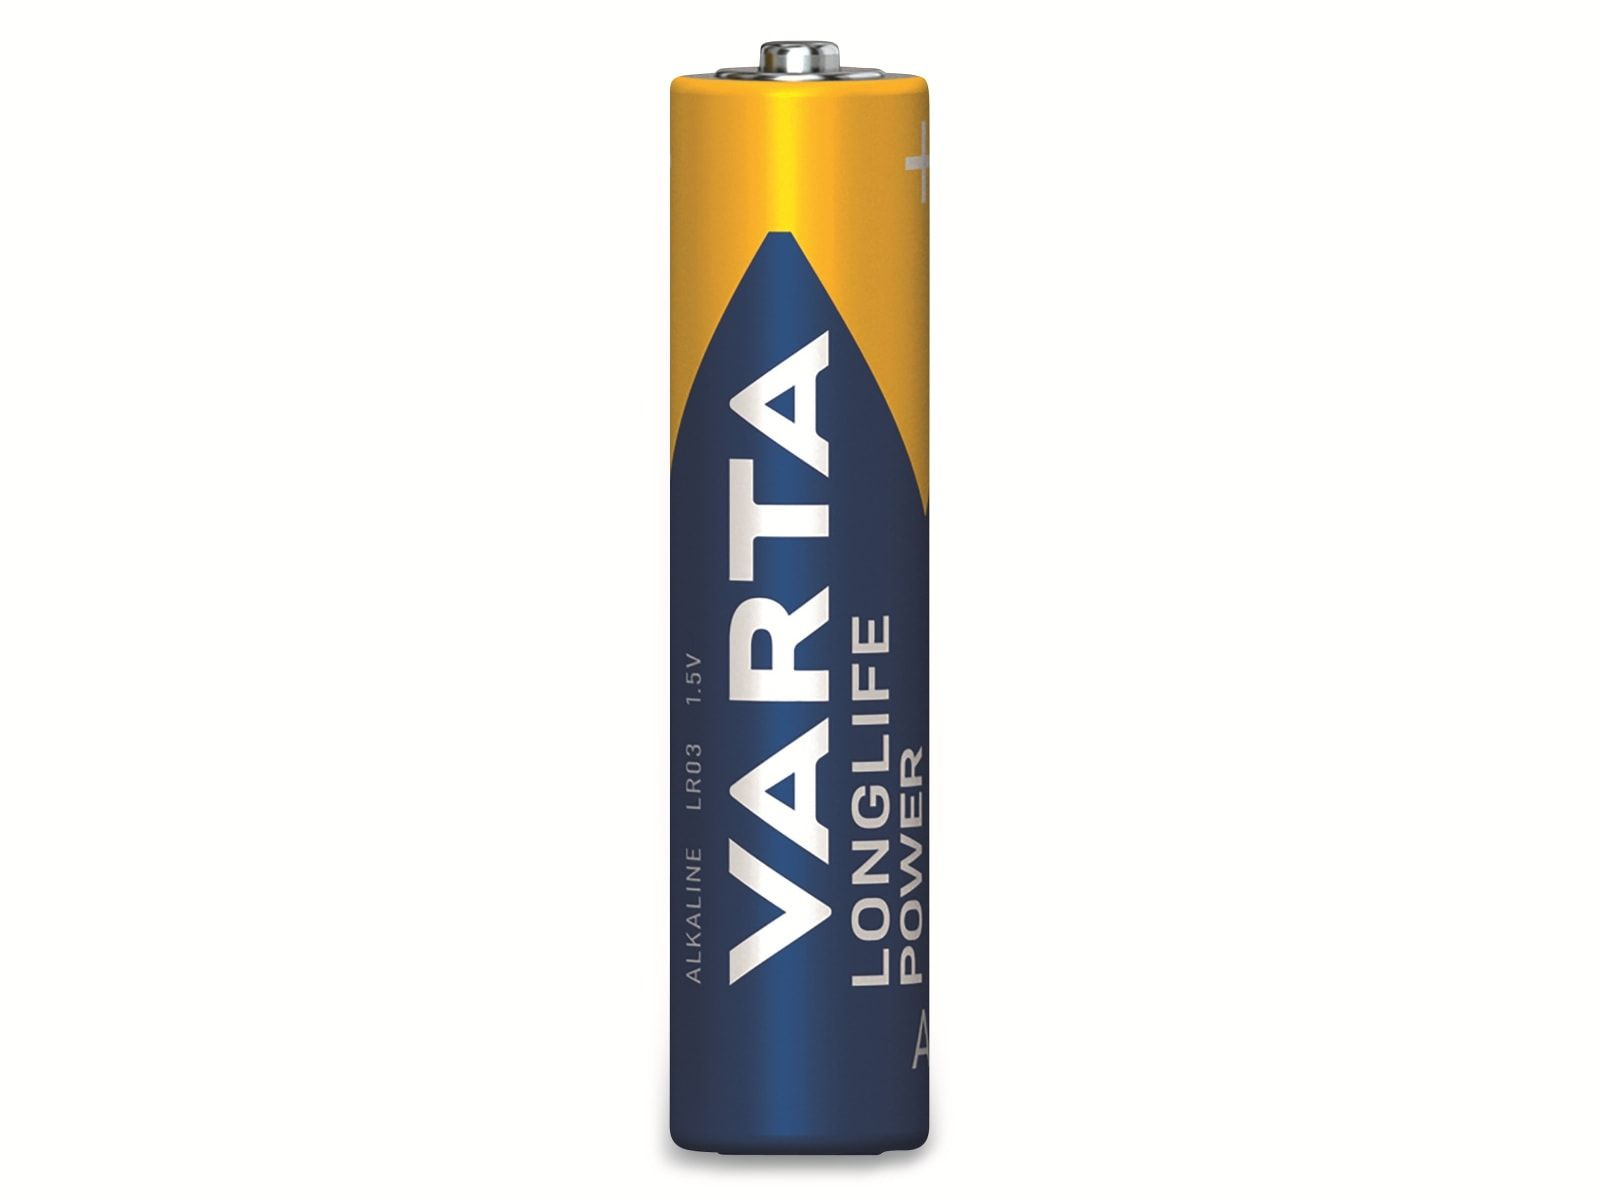 VARTA Batterie Alkaline, Micro, Stück Longlife Alkaline LR03, Power, 1.5V, 40 AAA, Batterie